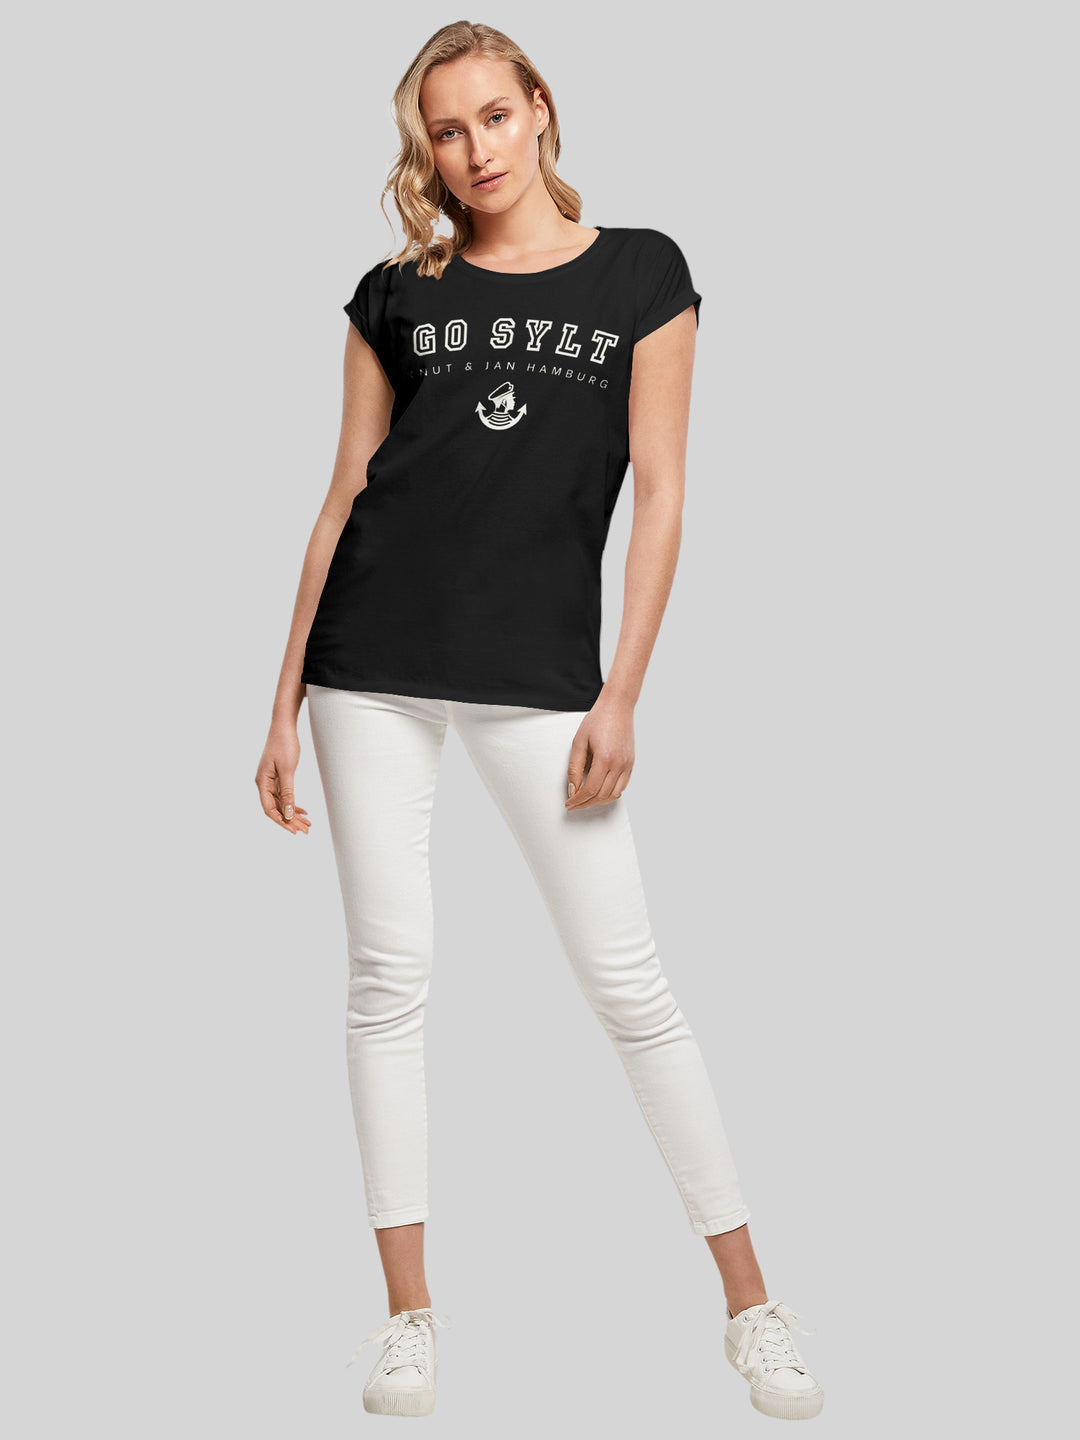 MALIN | T-Shirt Damen Go Sylt